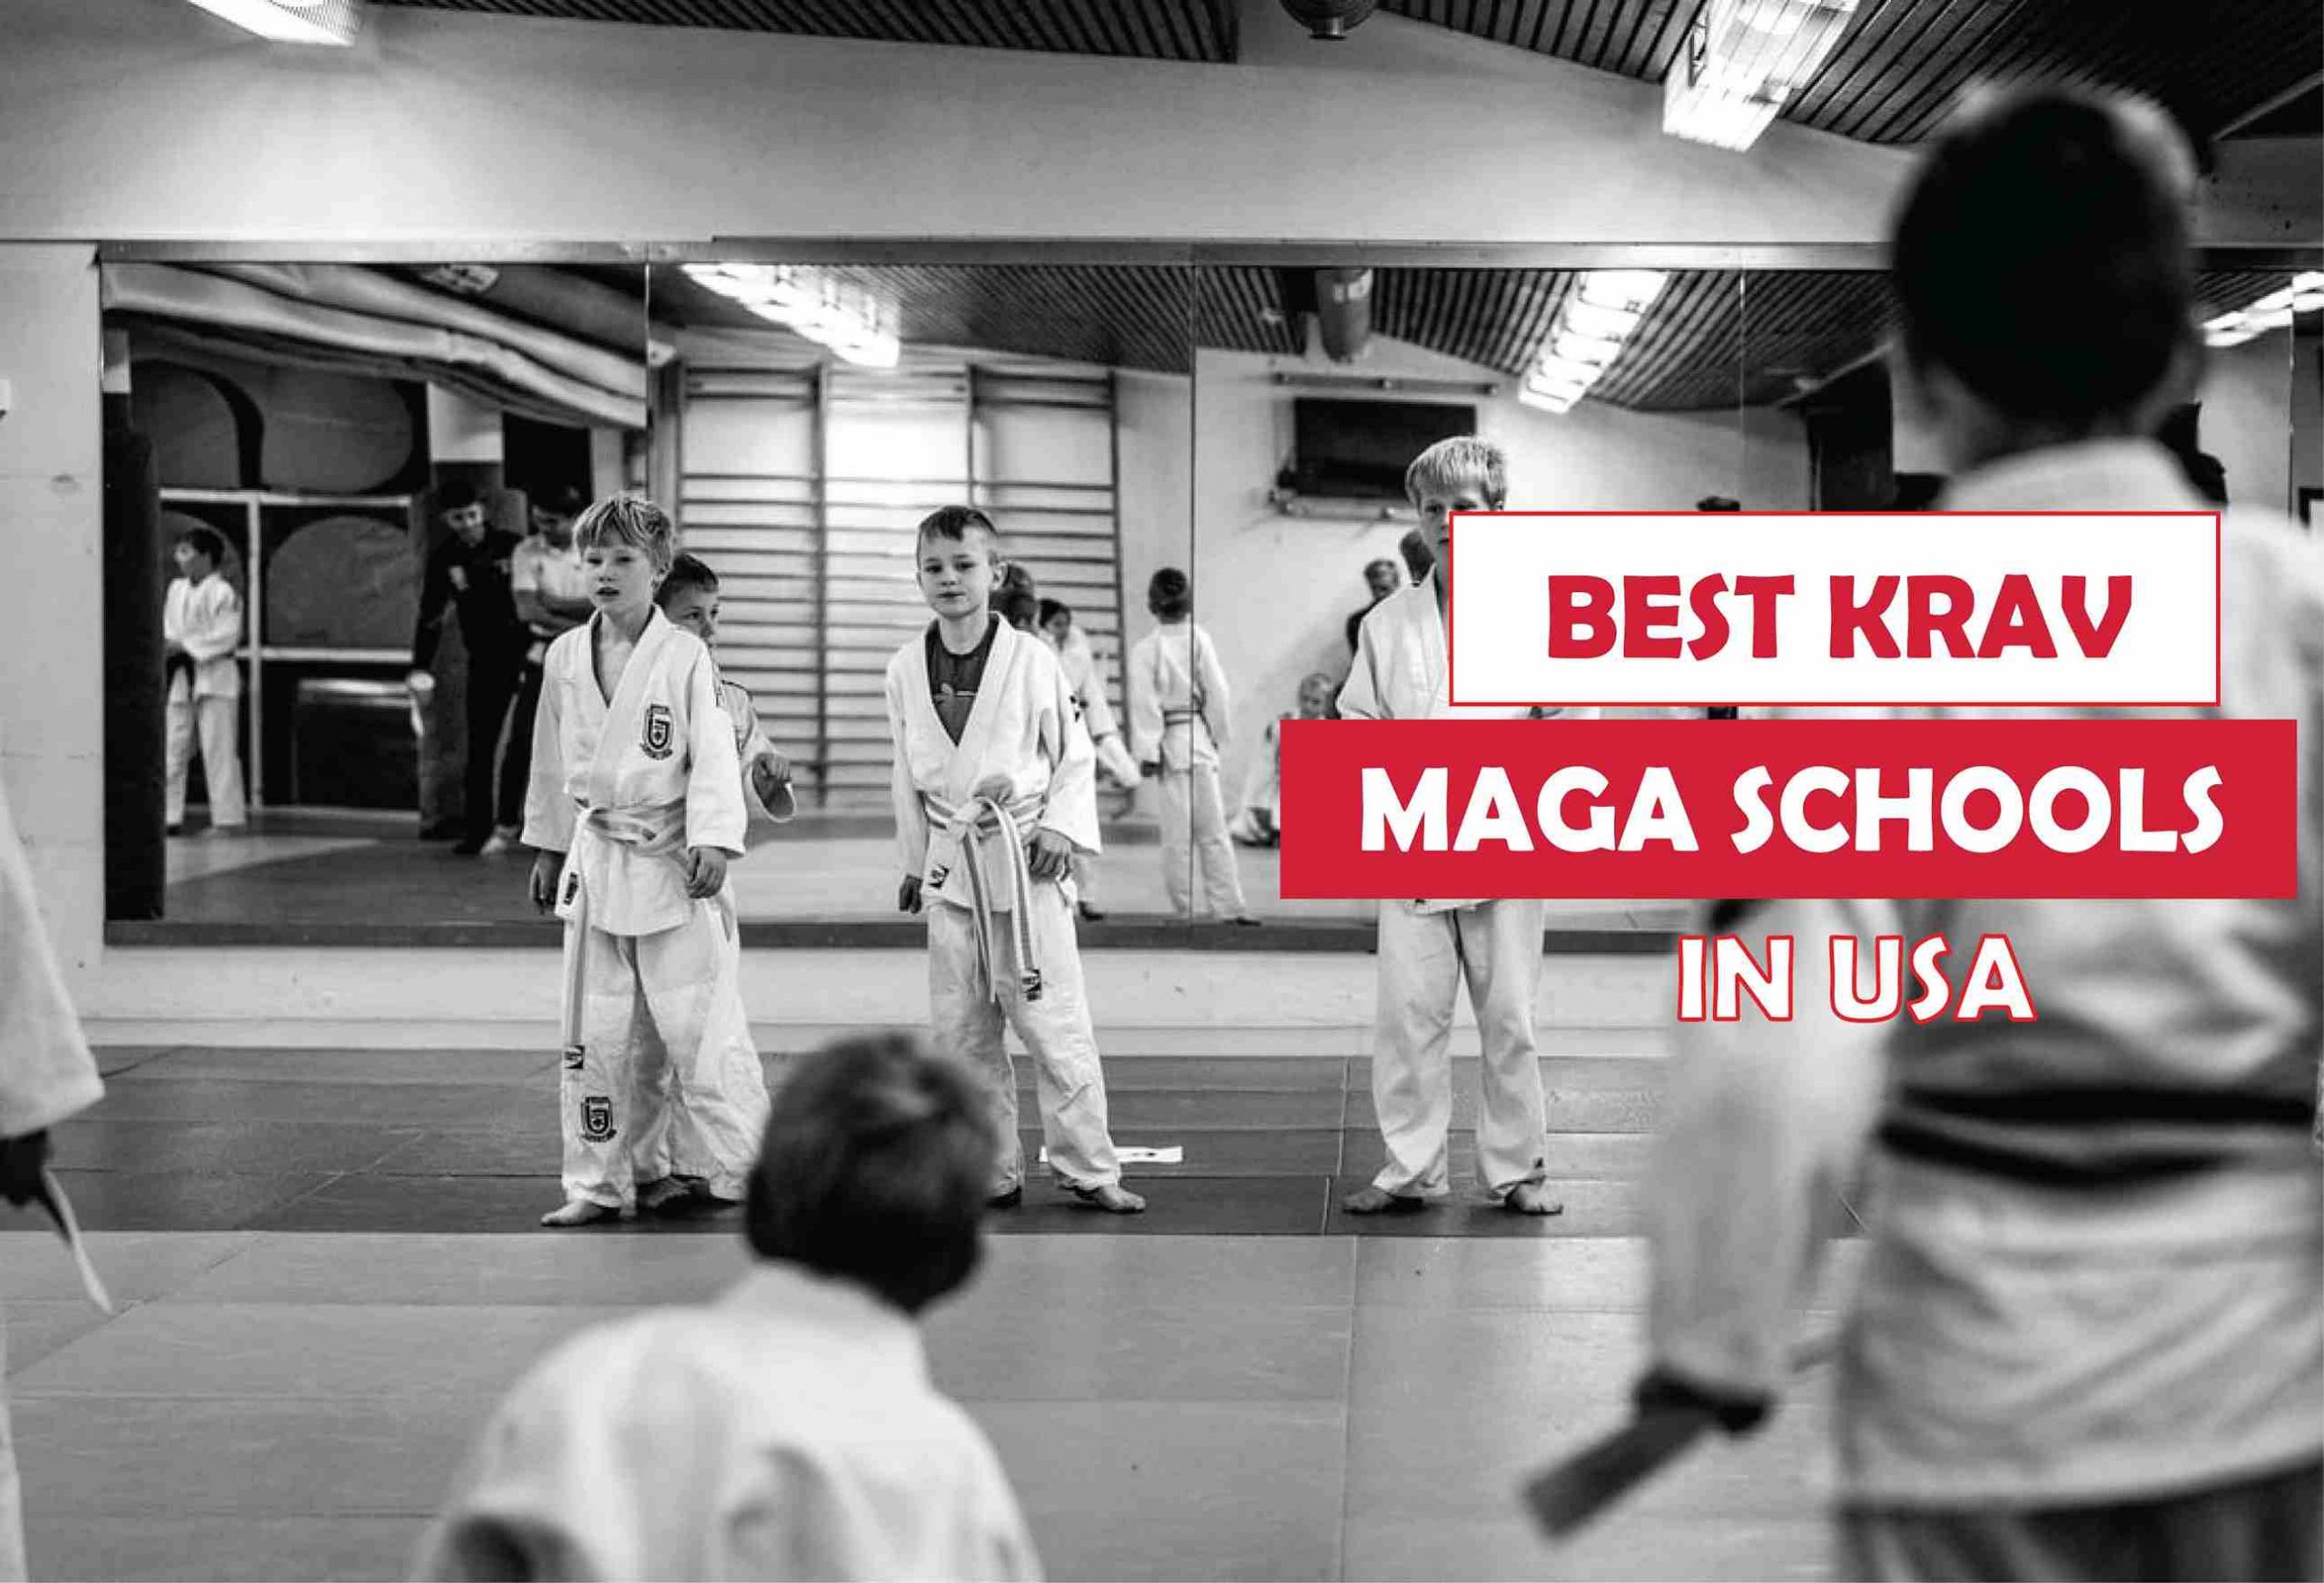 Top 3 Best Krav Maga Schools in USA